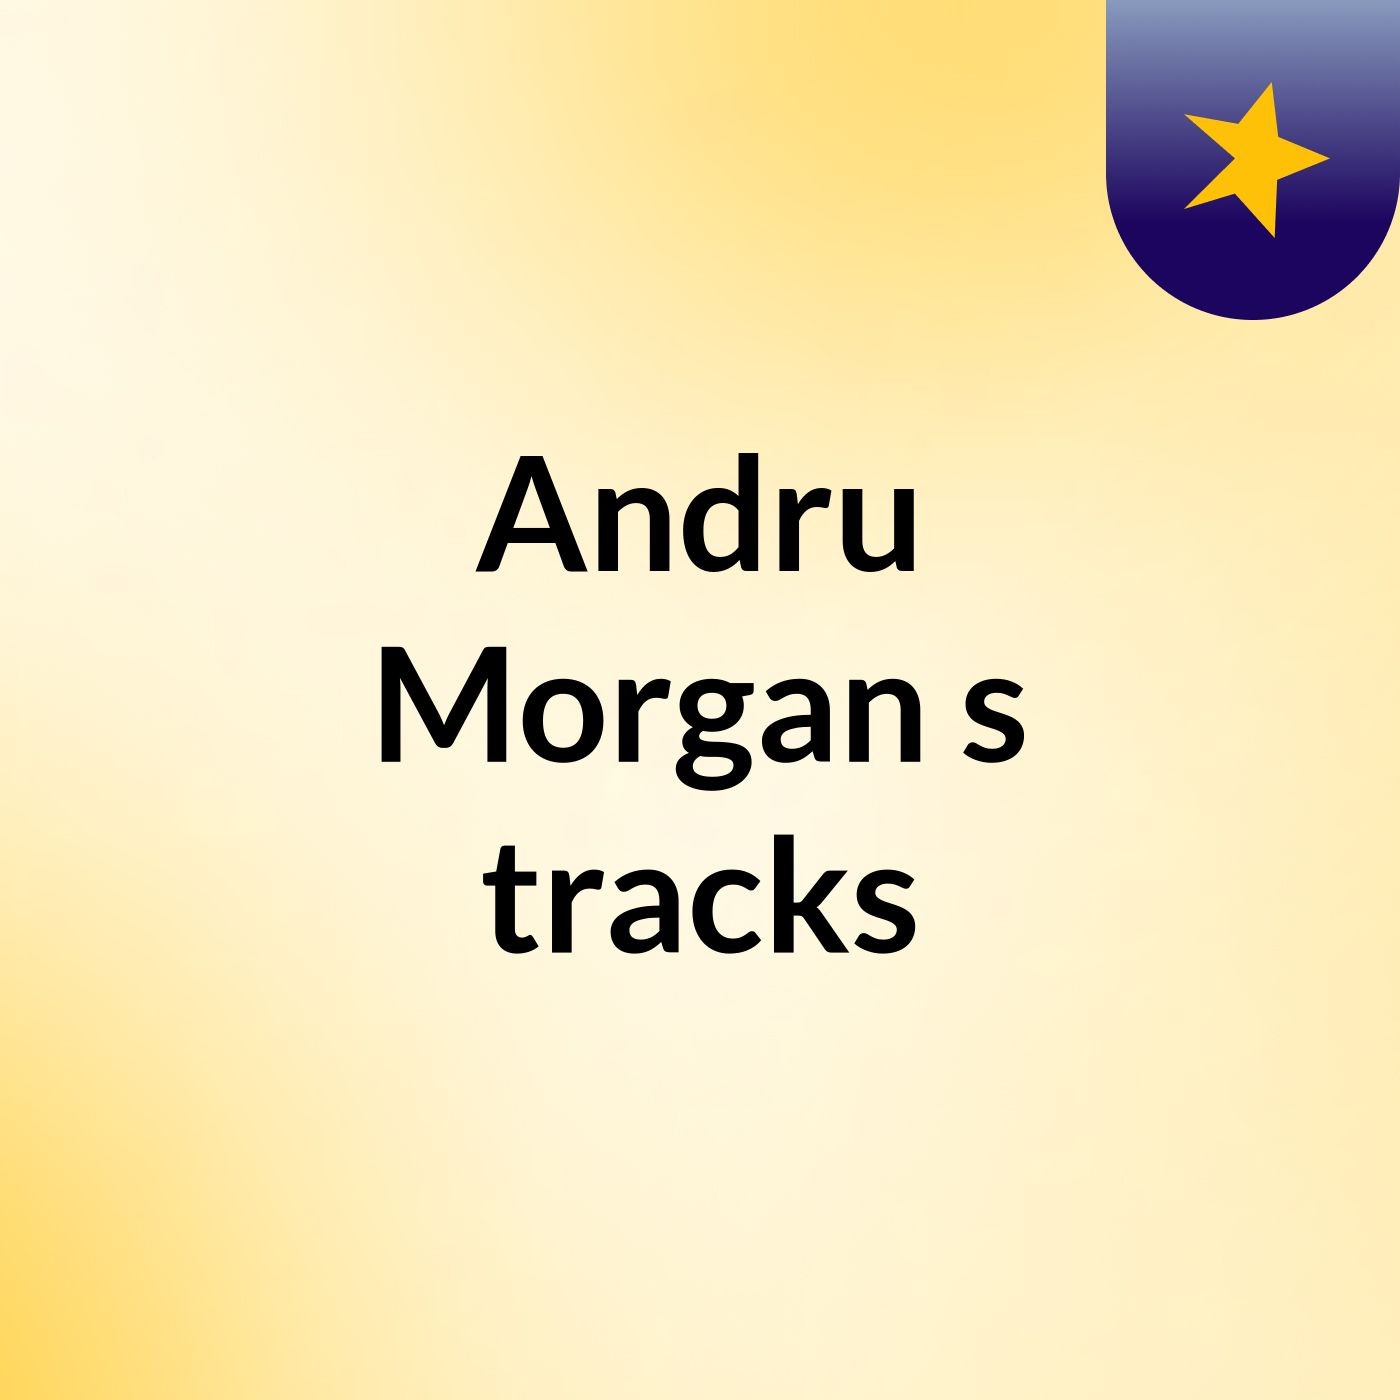 Andru Morgan's tracks